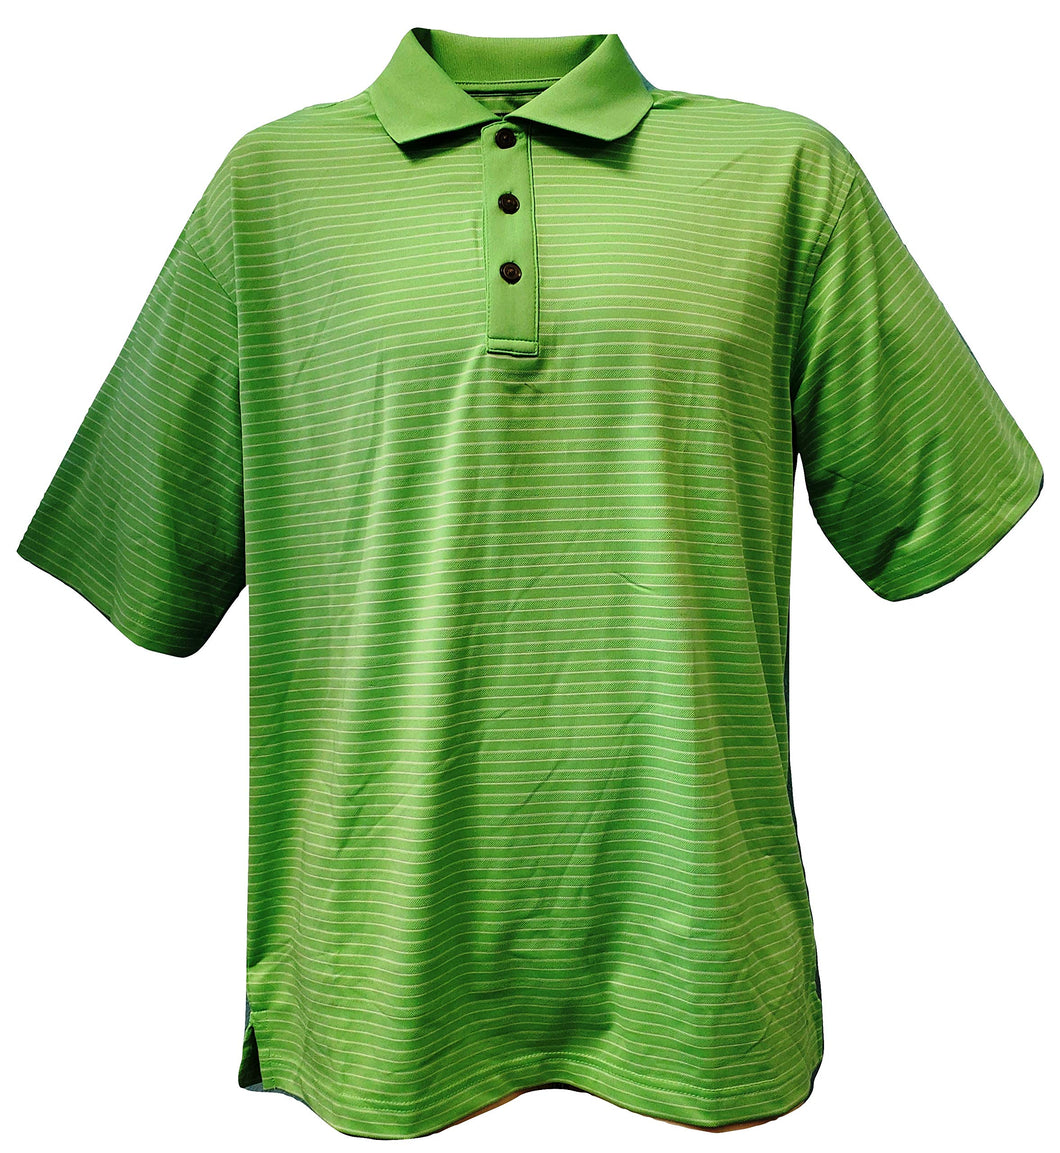 Mens Pin Stripe Polo Shirt (Green, Medium)